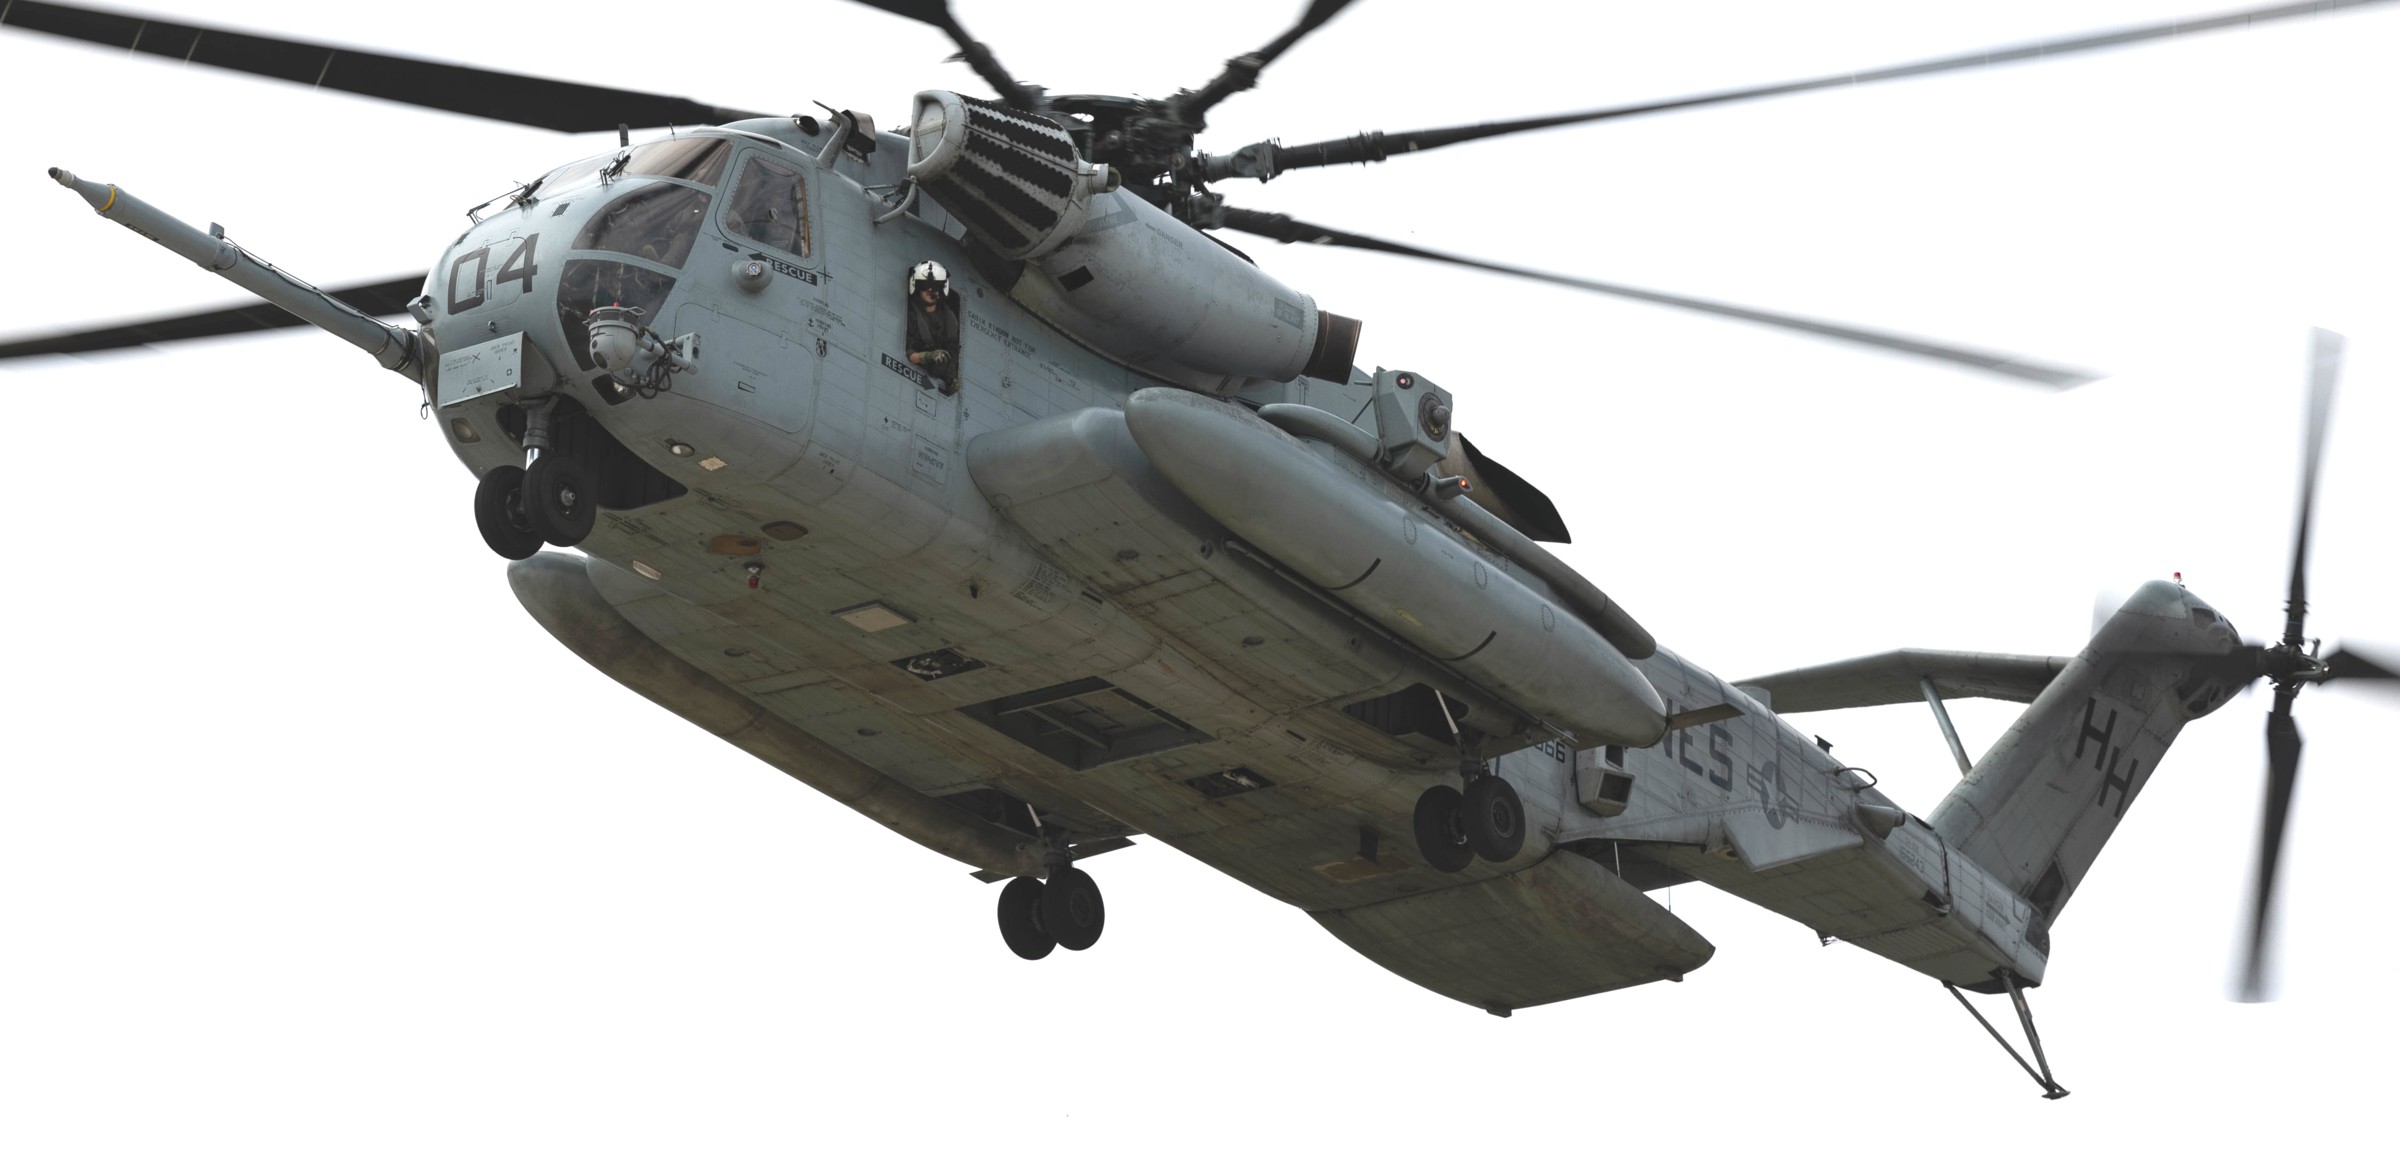 hmh-366 hammerheads ch-53e super stallion marine heavy helicopter squadron camp lejeune north carolina 176 